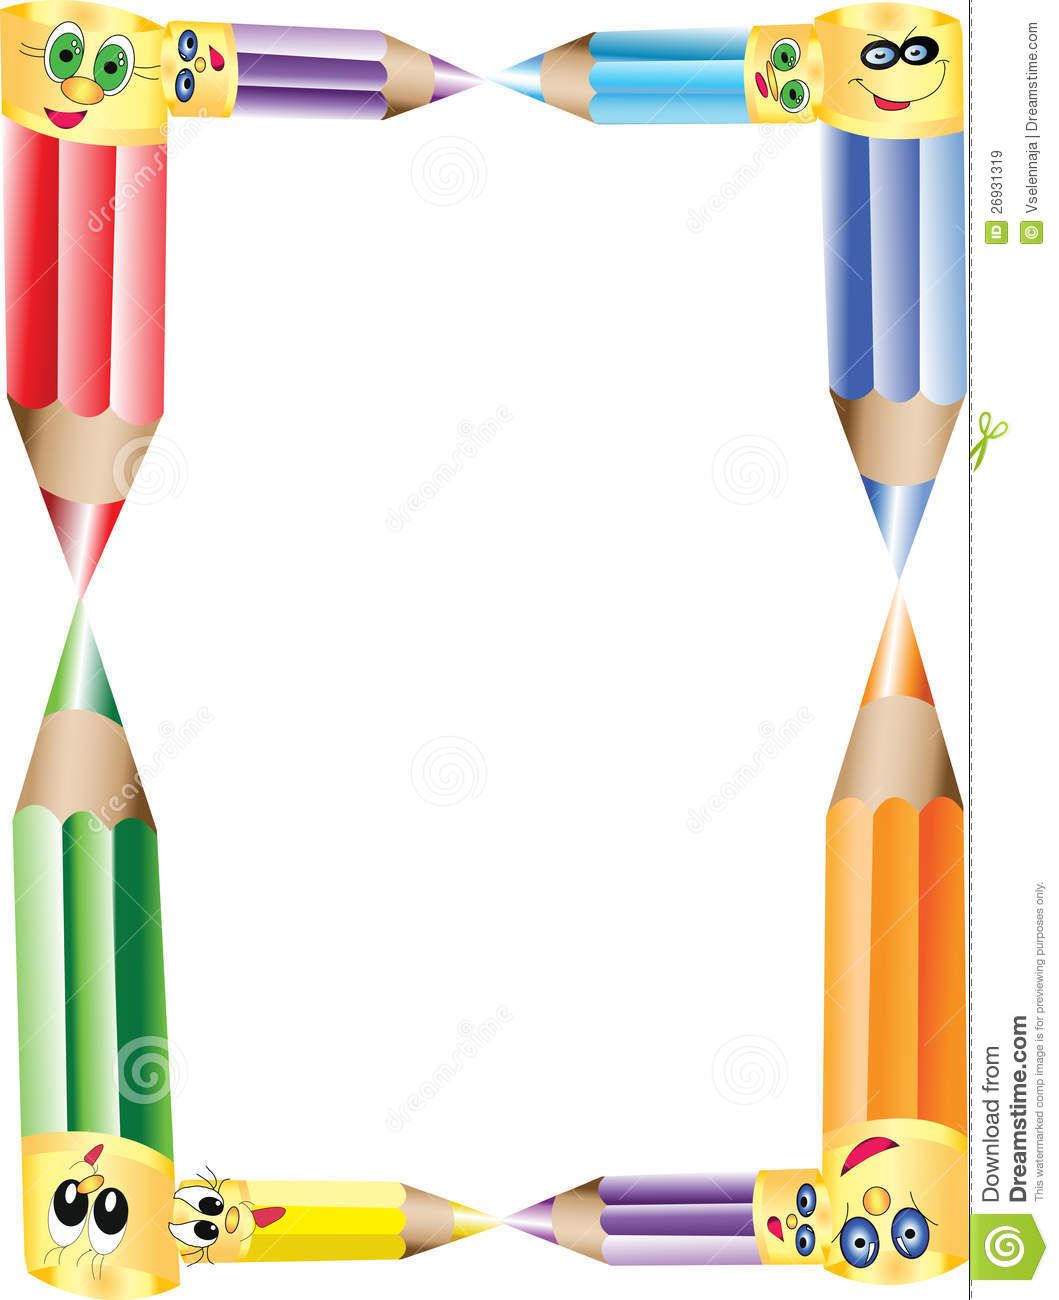 Pencils border frame.